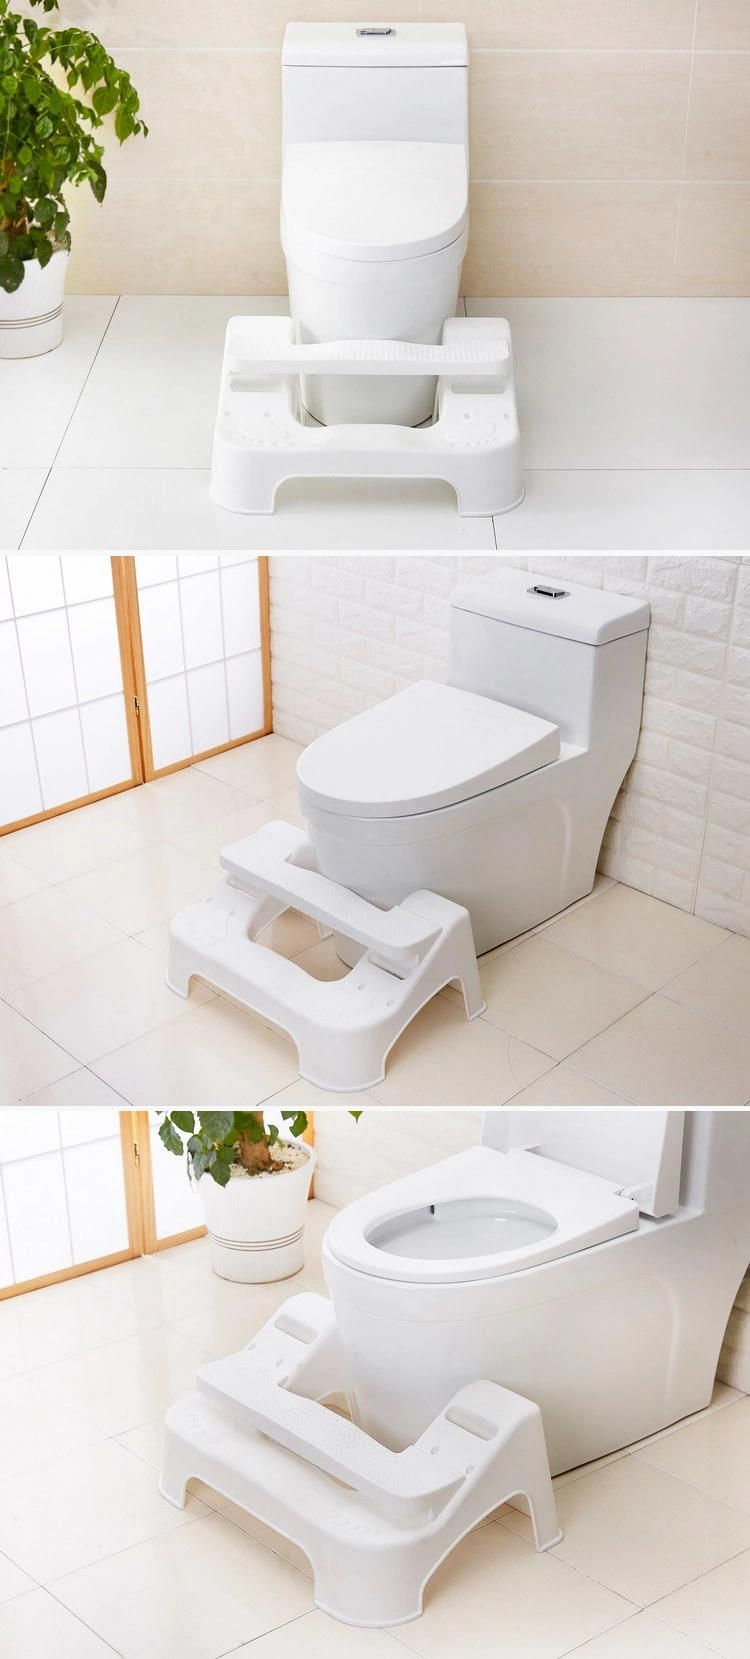 2021 New Adjustable Plastic Bathroom Toilet Stool Squatty Potty